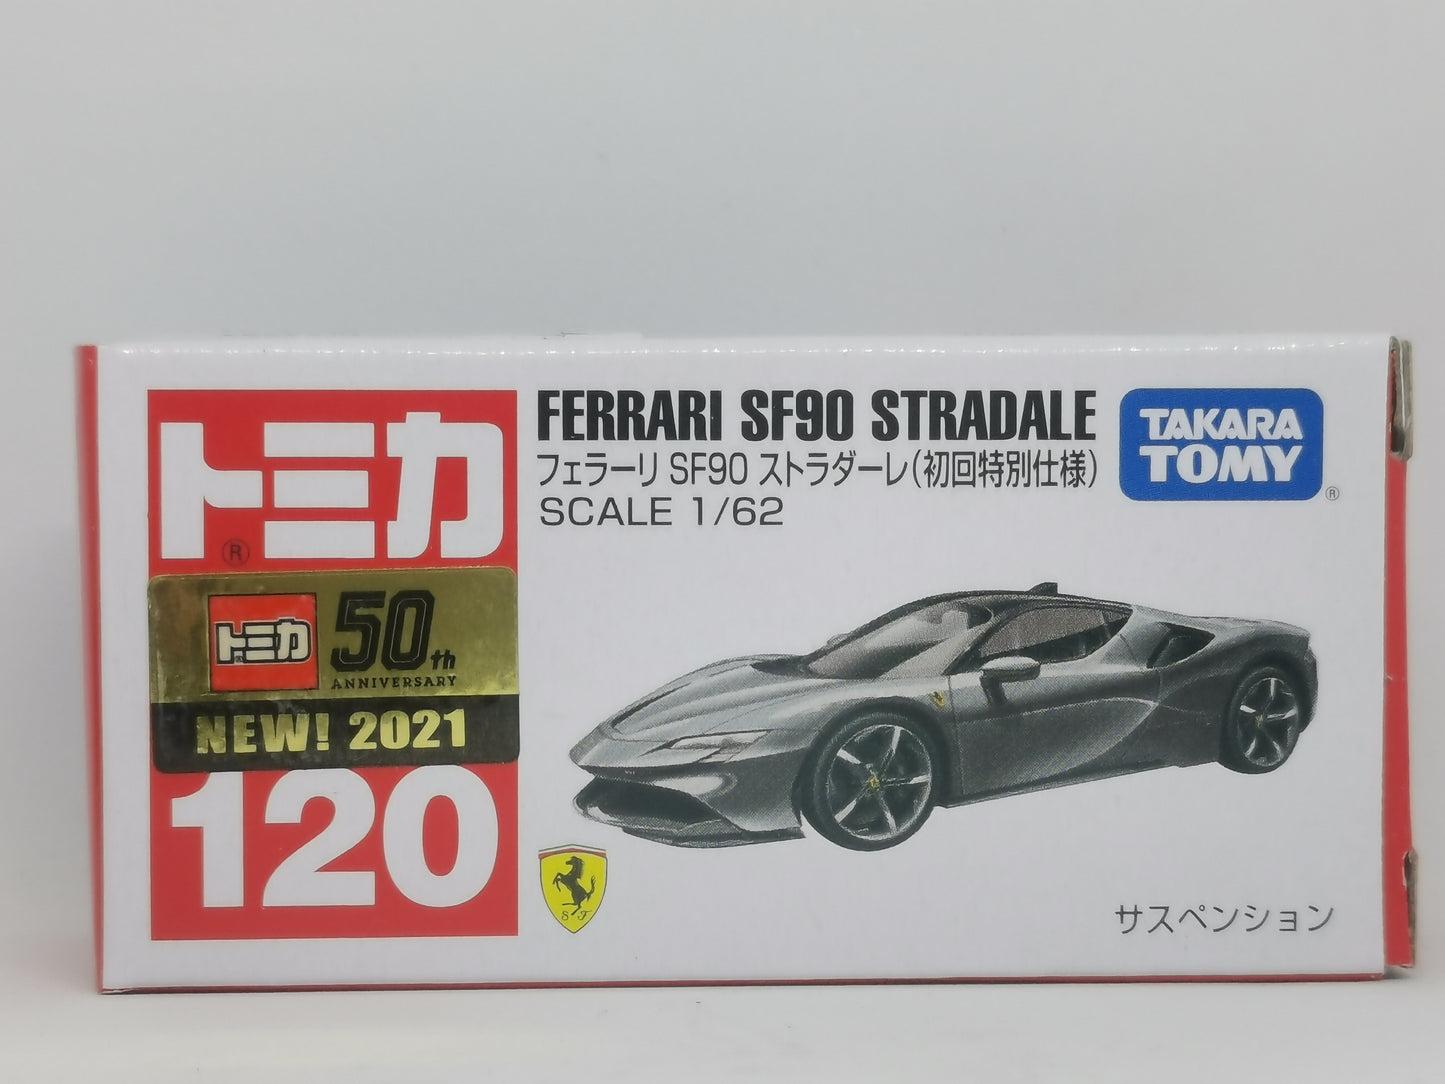 Tomica #120 Ferrari SF90 Stradale Set Of Two